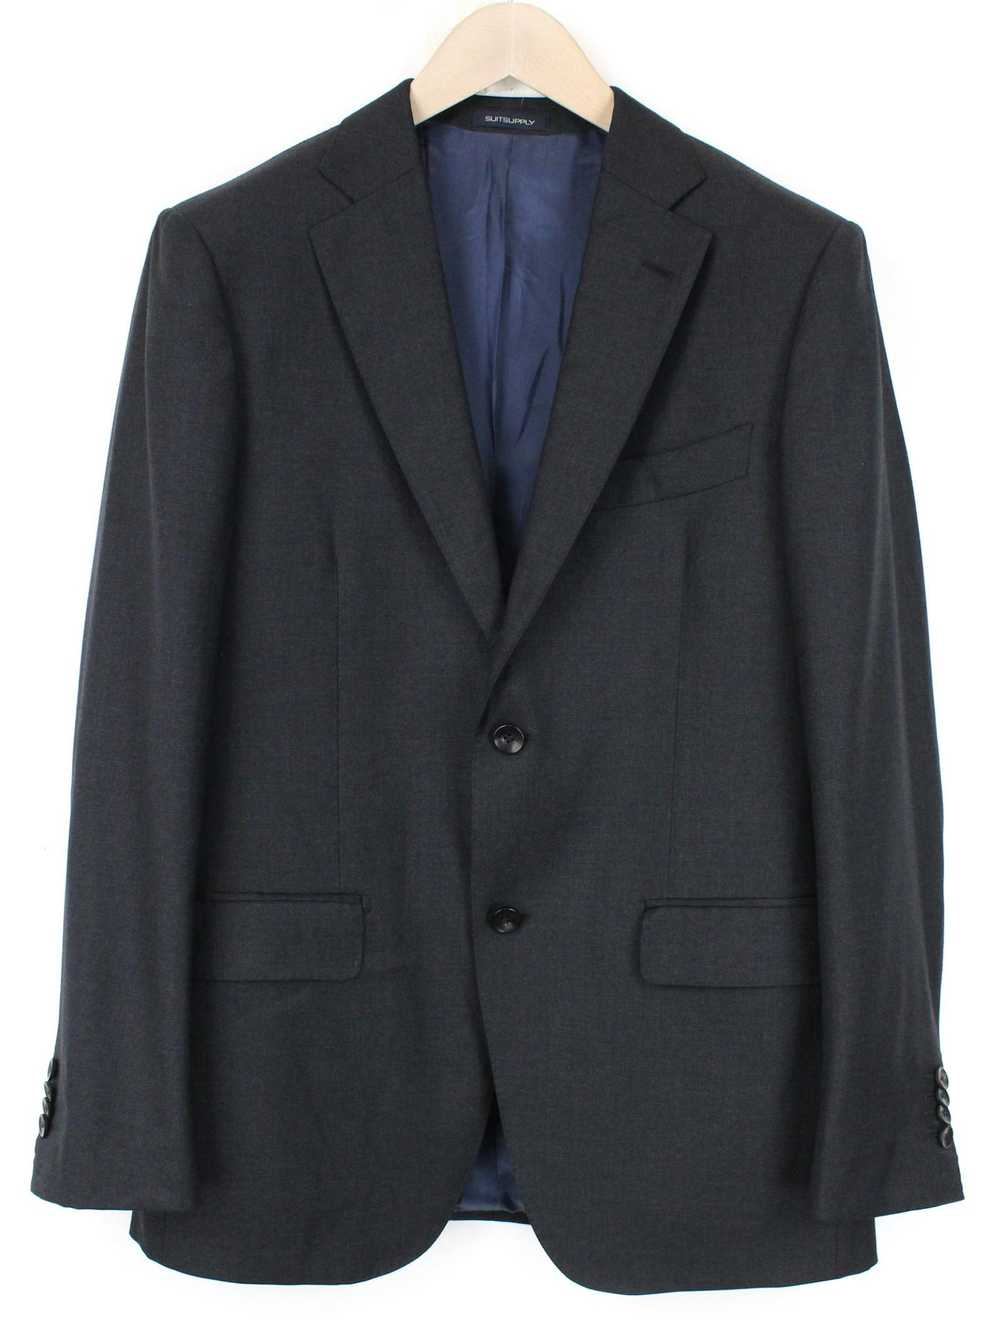 Suitsupply NAPOLI UK38R Wool Grey Suit 68958 - image 2